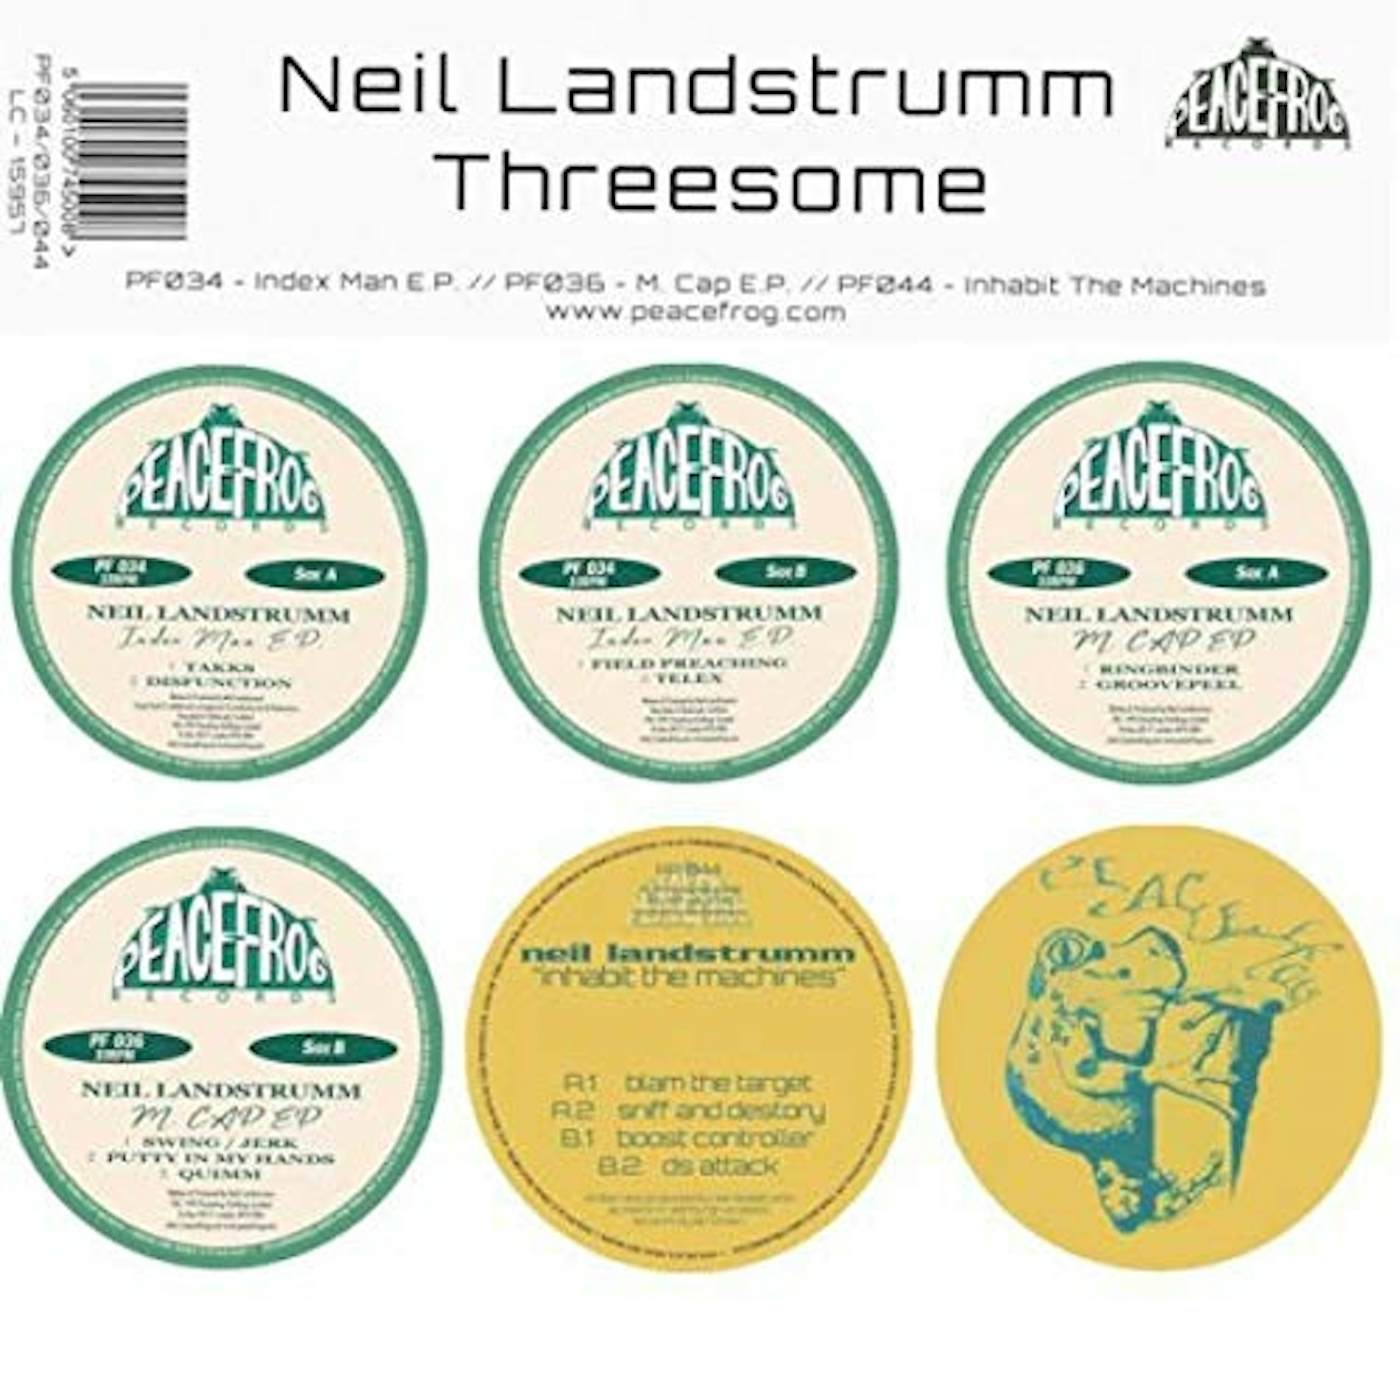 Neil Landstrumm THREESOME Vinyl Record